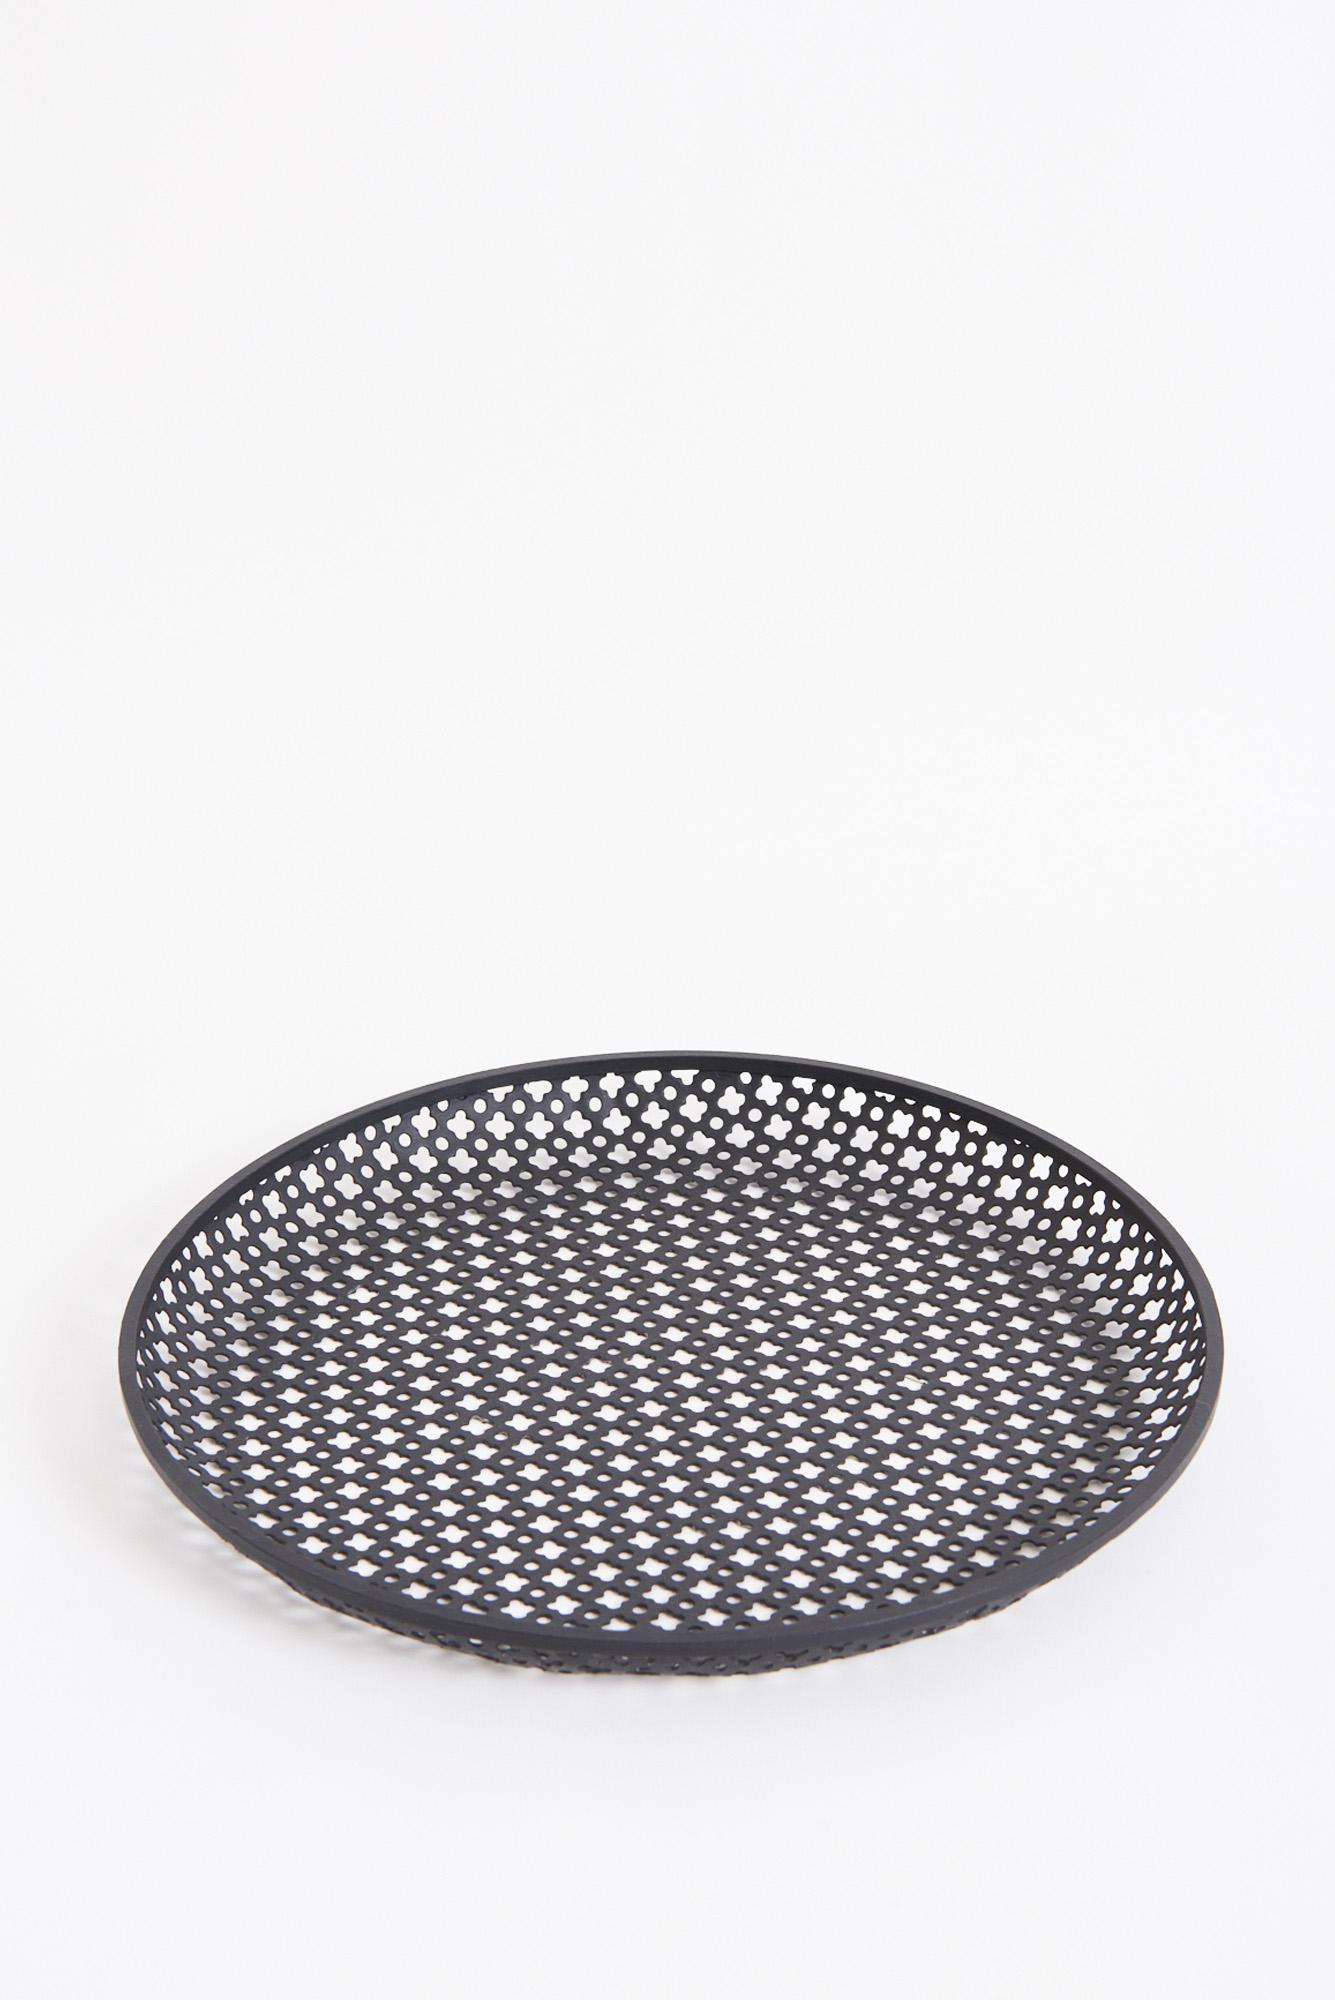 A circular rigitule tray by Mathieu Mategot
France, mid 20th Century
3 cm high by 32 cm diameter